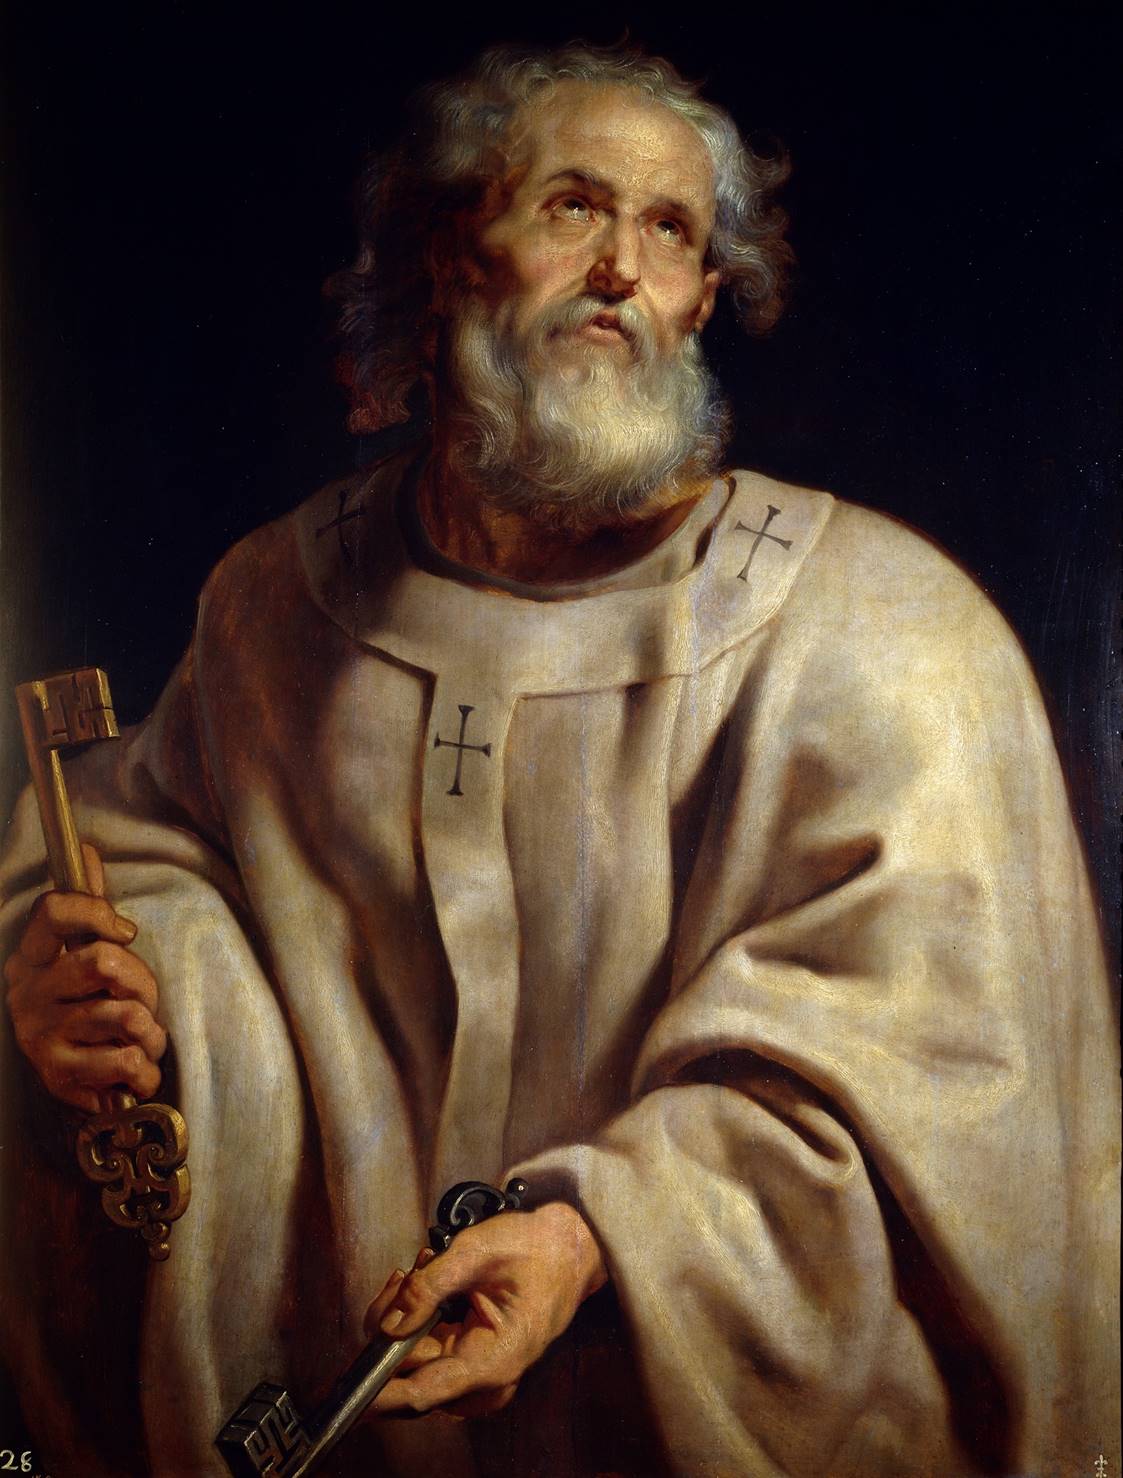 Saint Peter - Simple English Wikipedia, the free encyclopedia